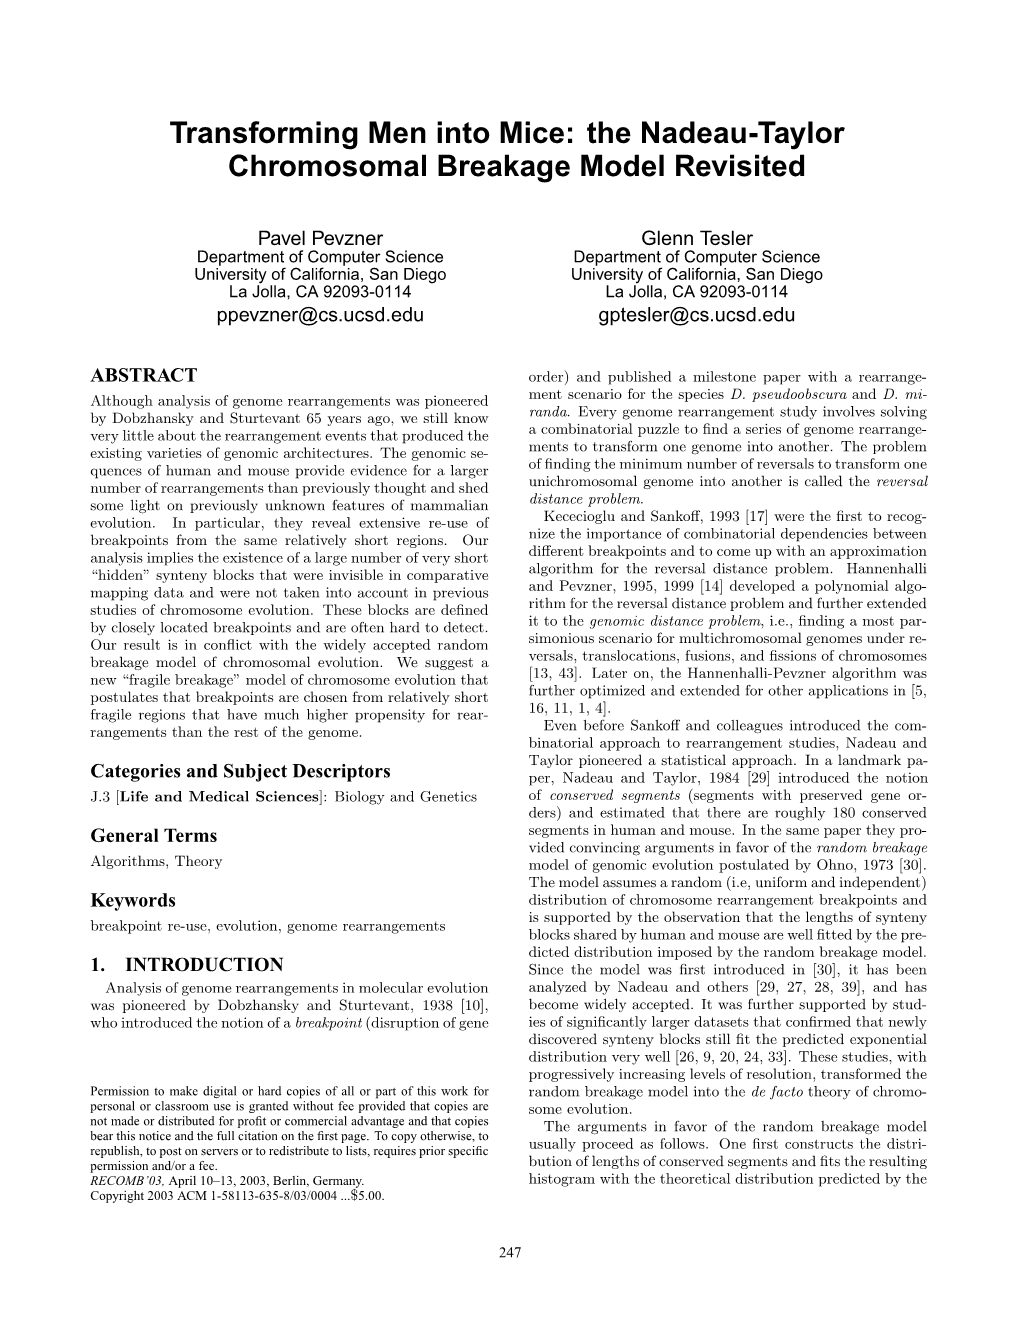 The Nadeau-Taylor Chromosomal Breakage Model Revisited